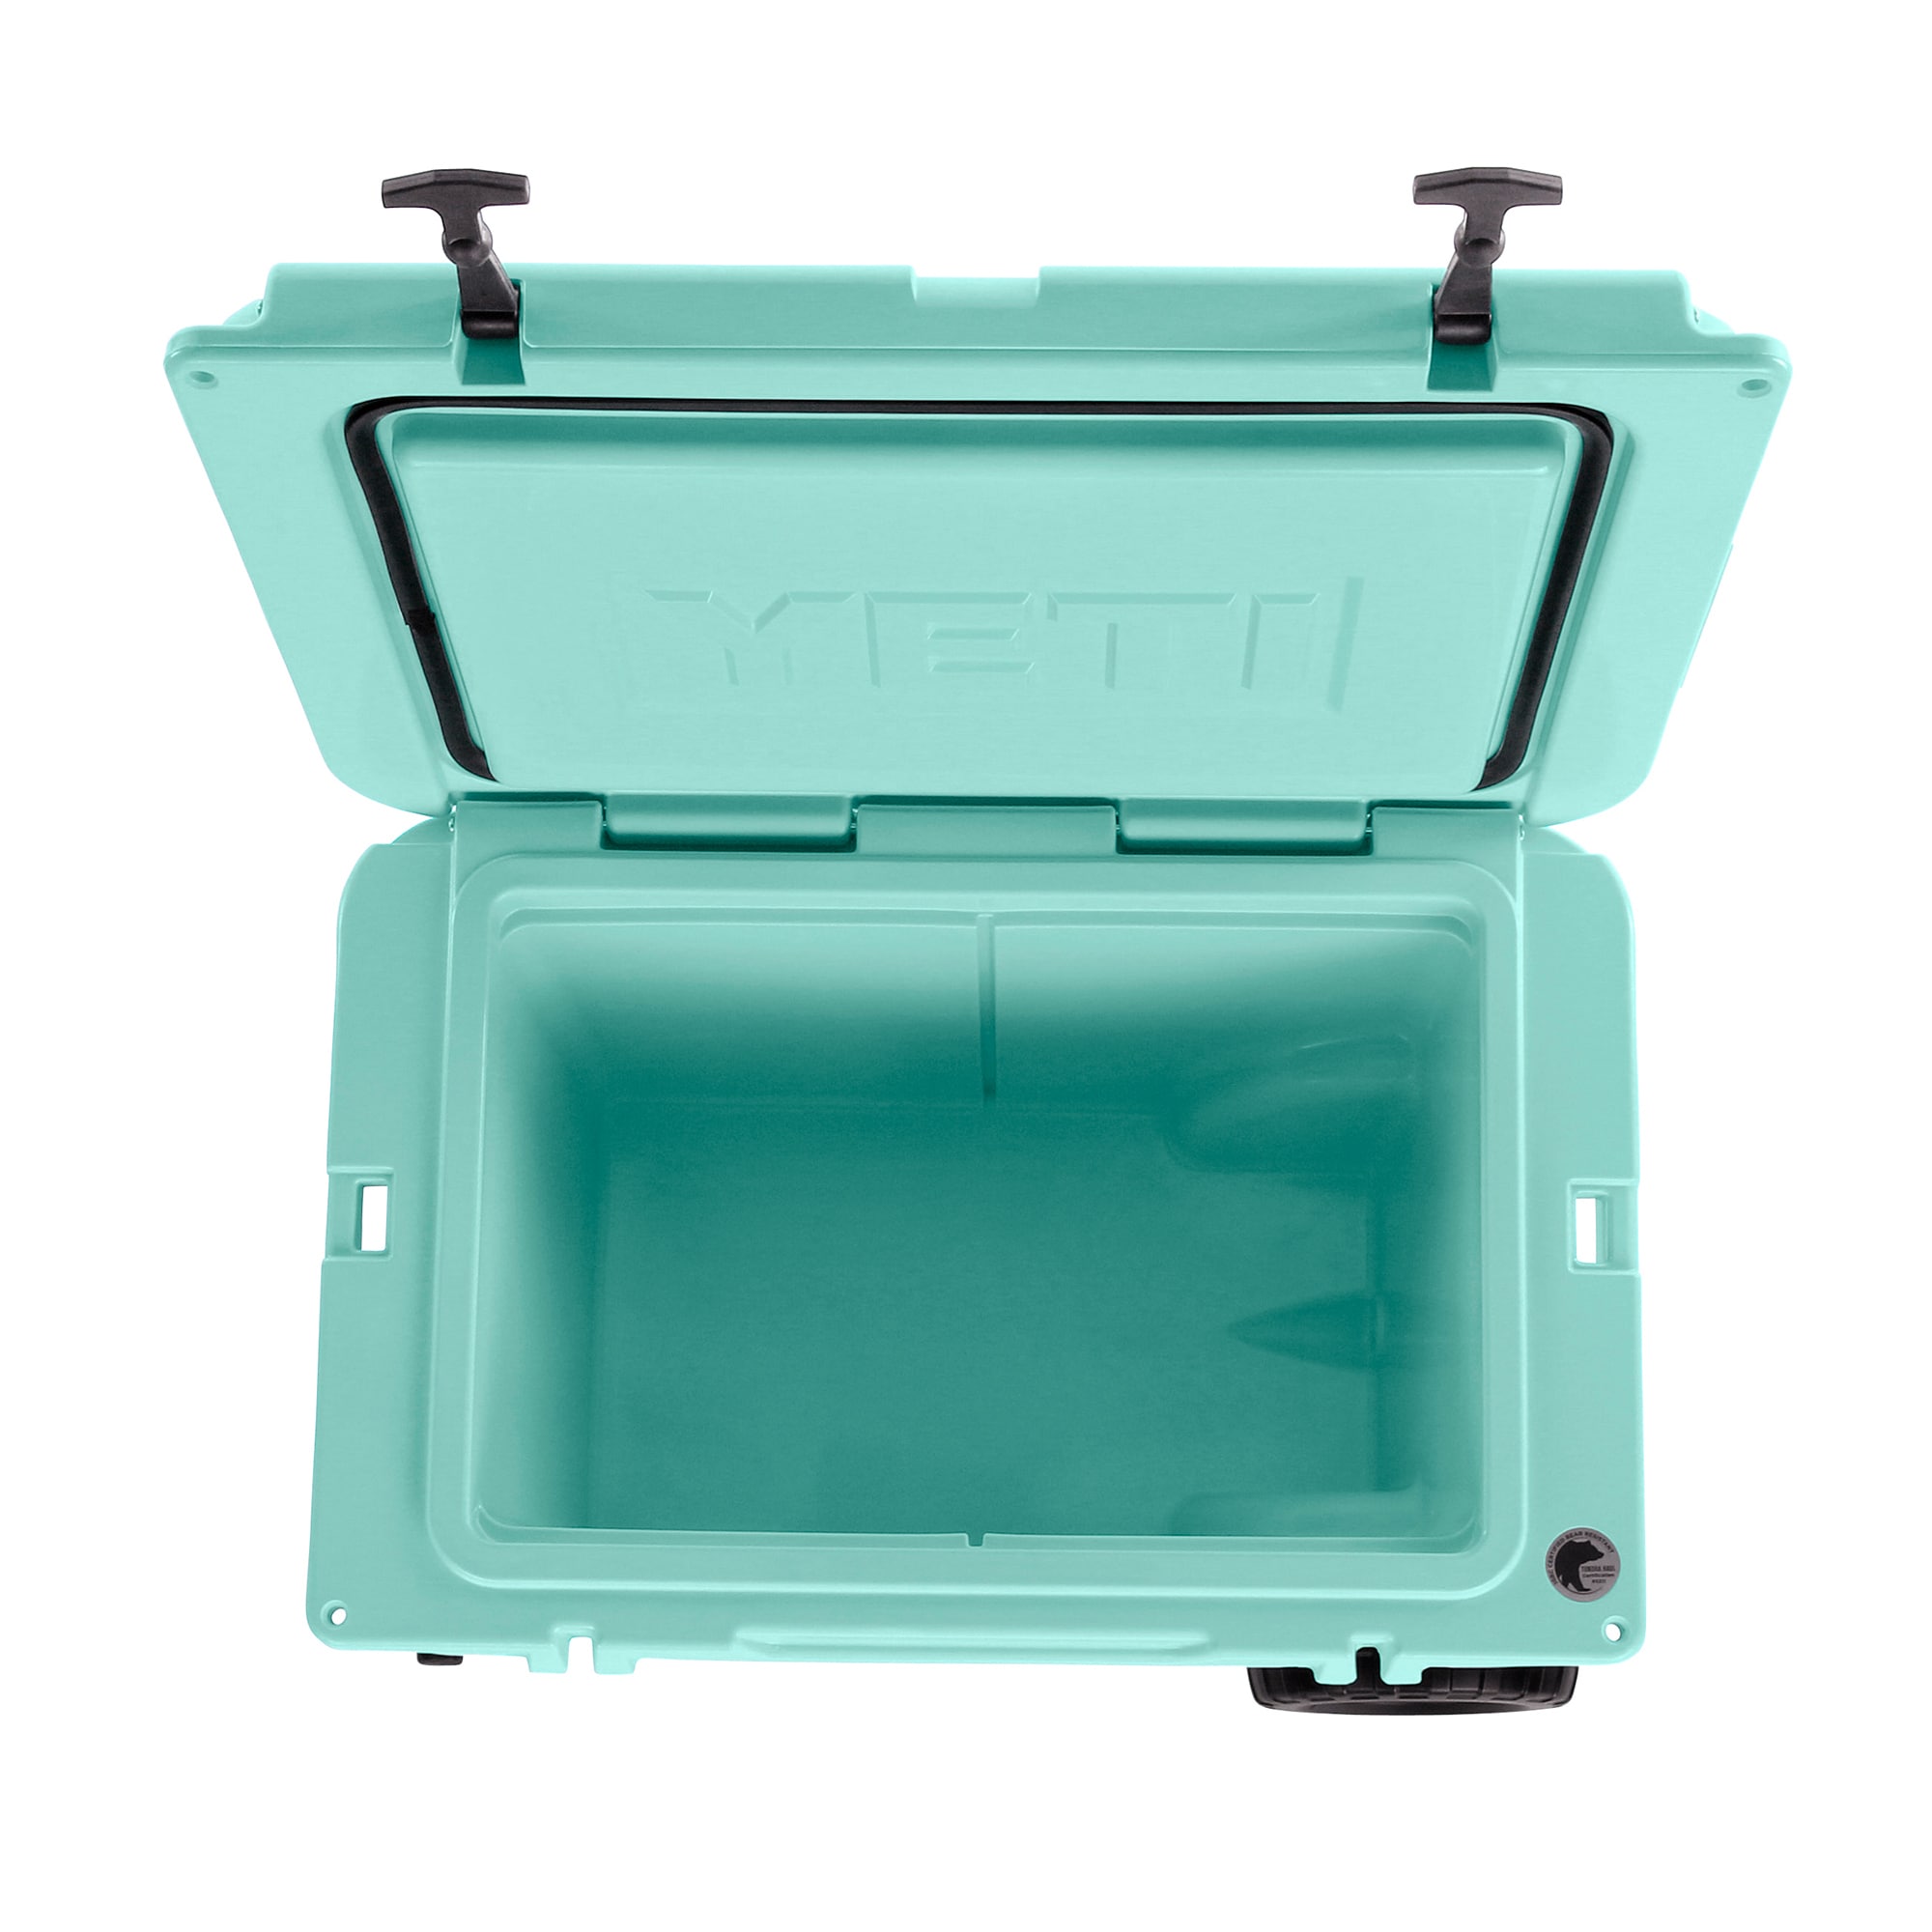 YETI Tundra 35 Limited Edition Seafoam Cooler